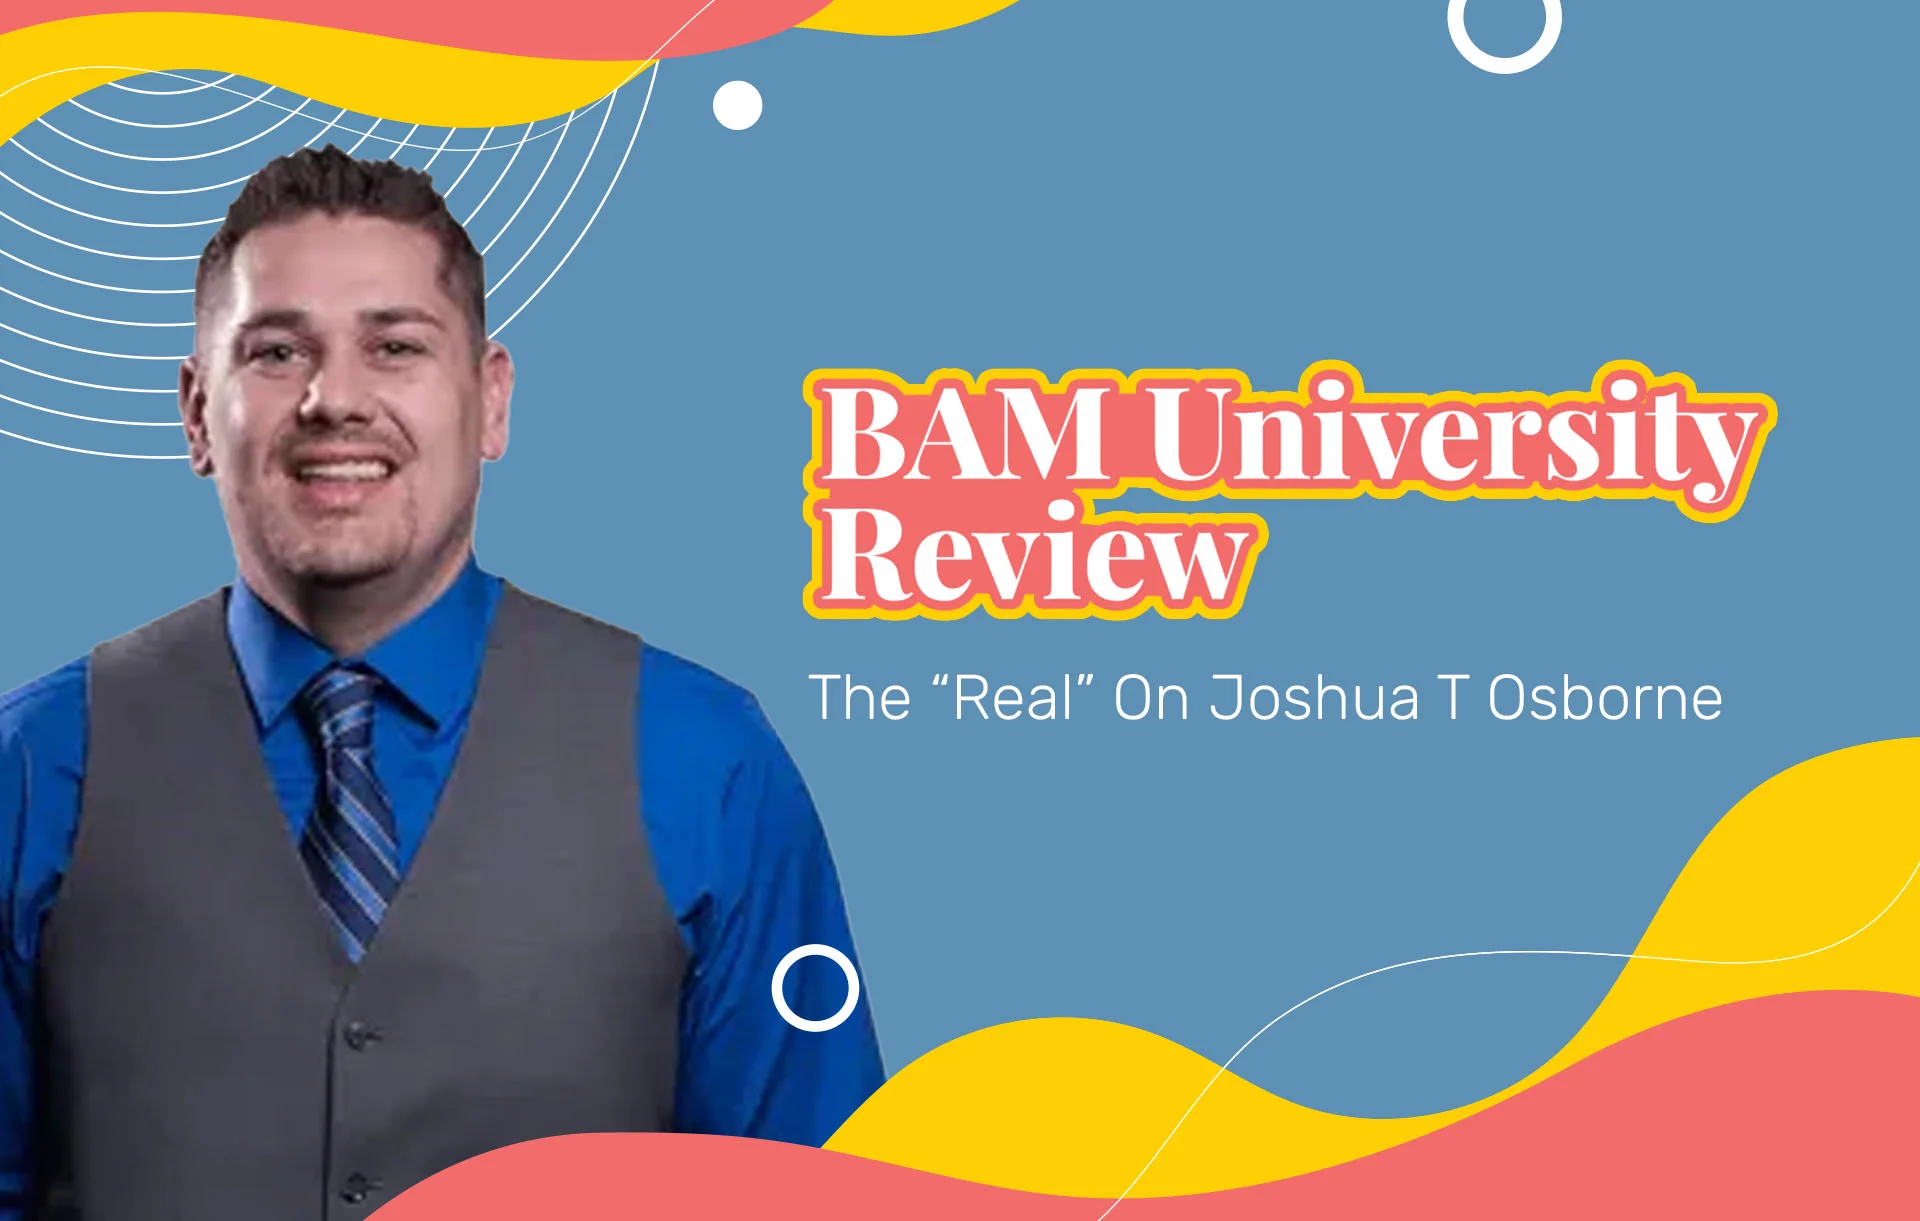 BAM University Reviews: The “Real” On Joshua T Osborne